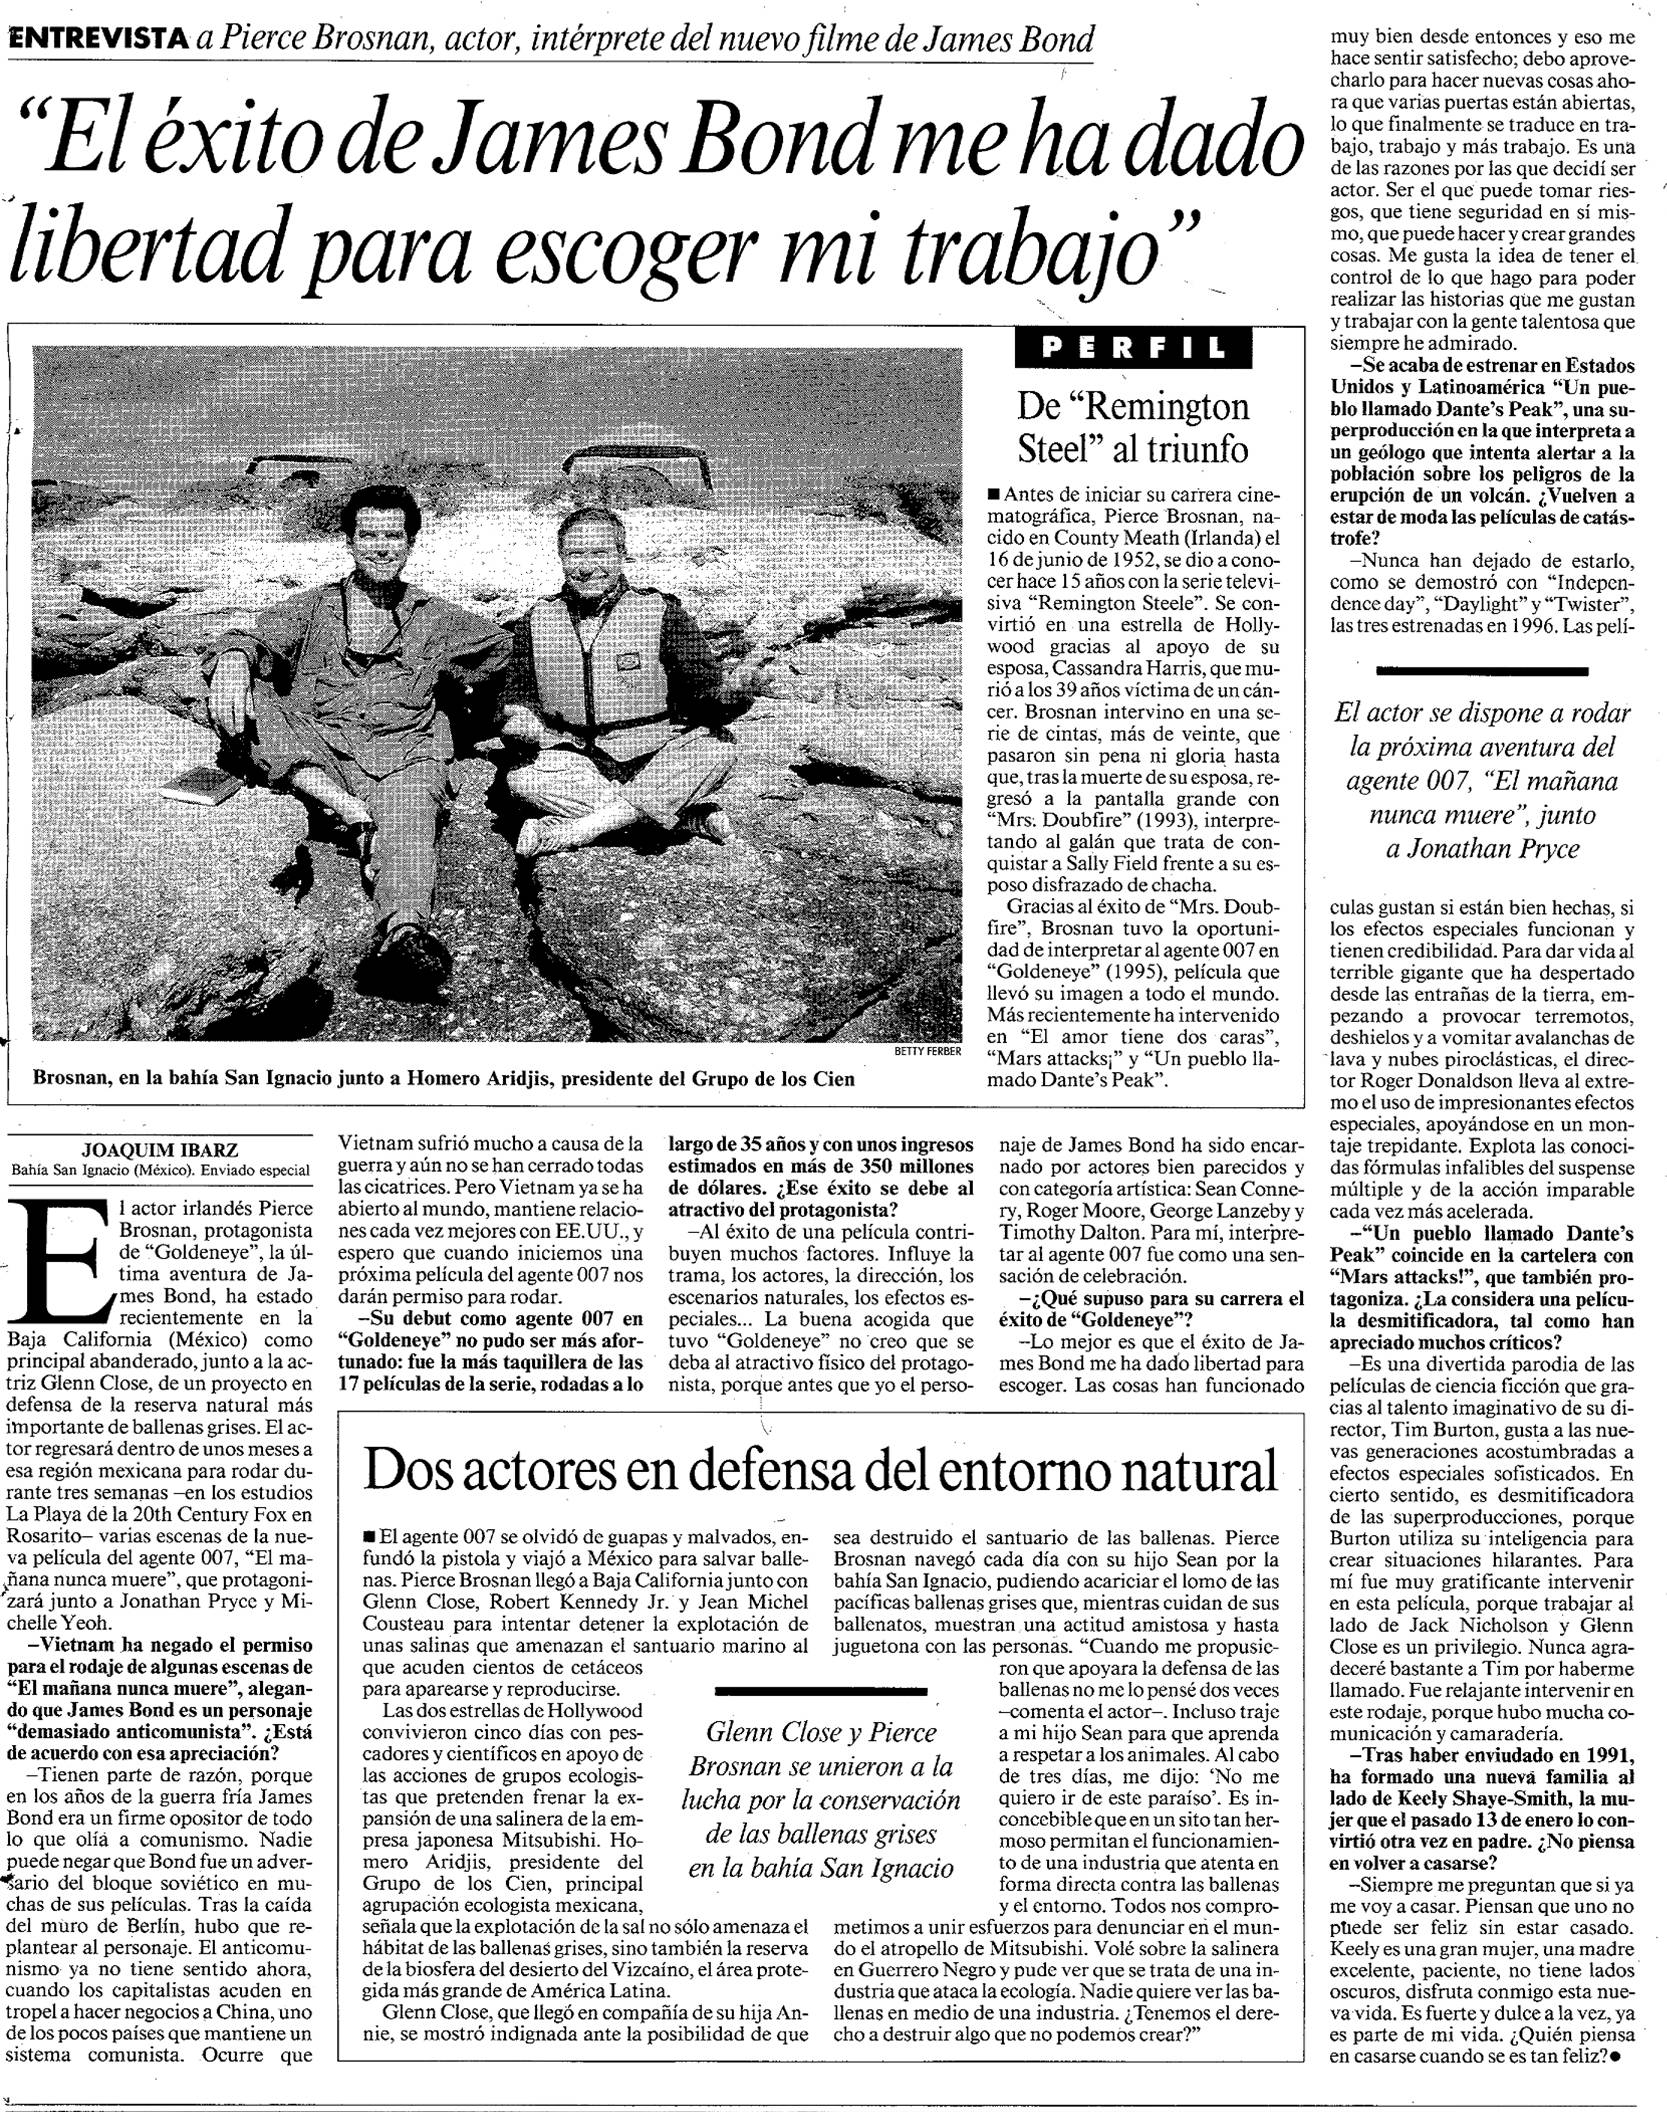 18 1997 03 22 La Vanguardia Barcelona 046 Brosnan